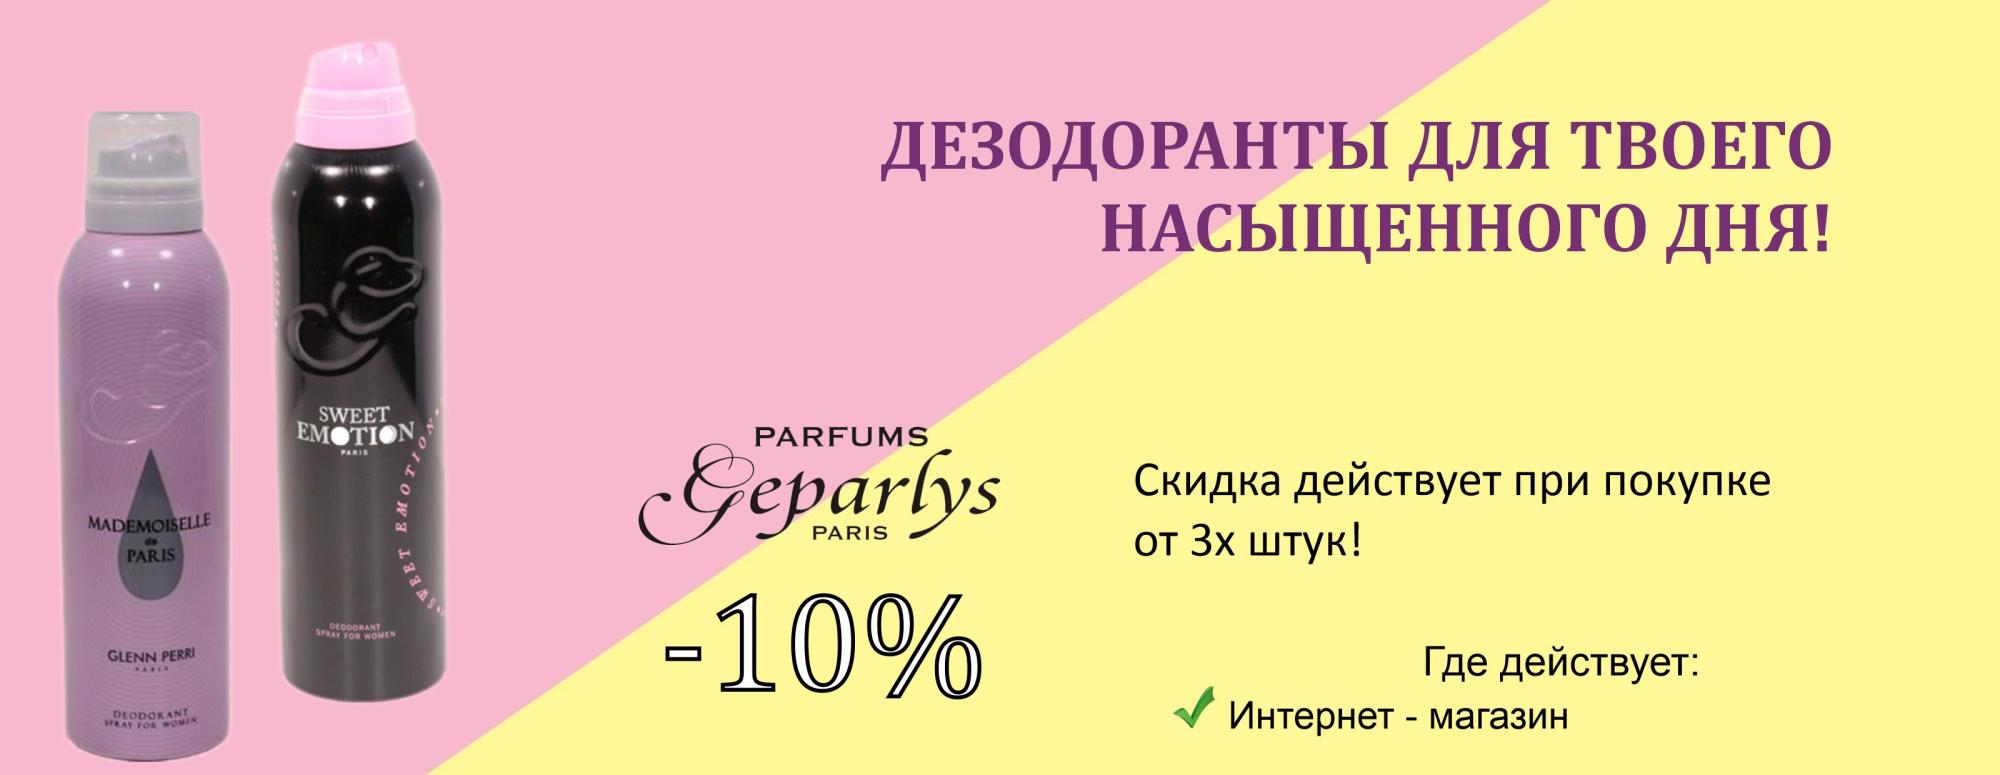 Geparlys - 10% при покупке от 3х штук!